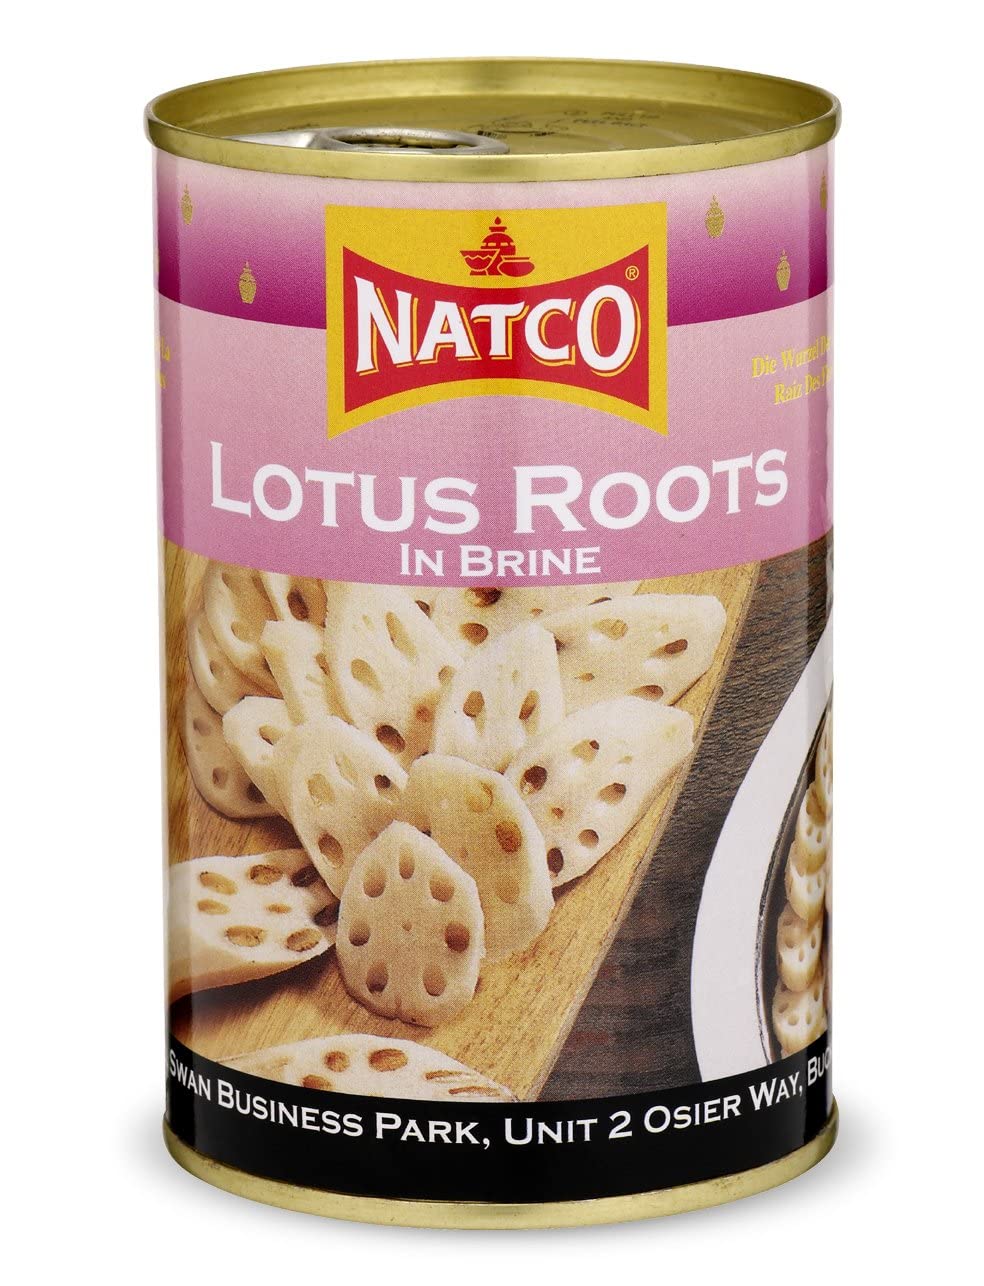 Natco Lotus Root 400g